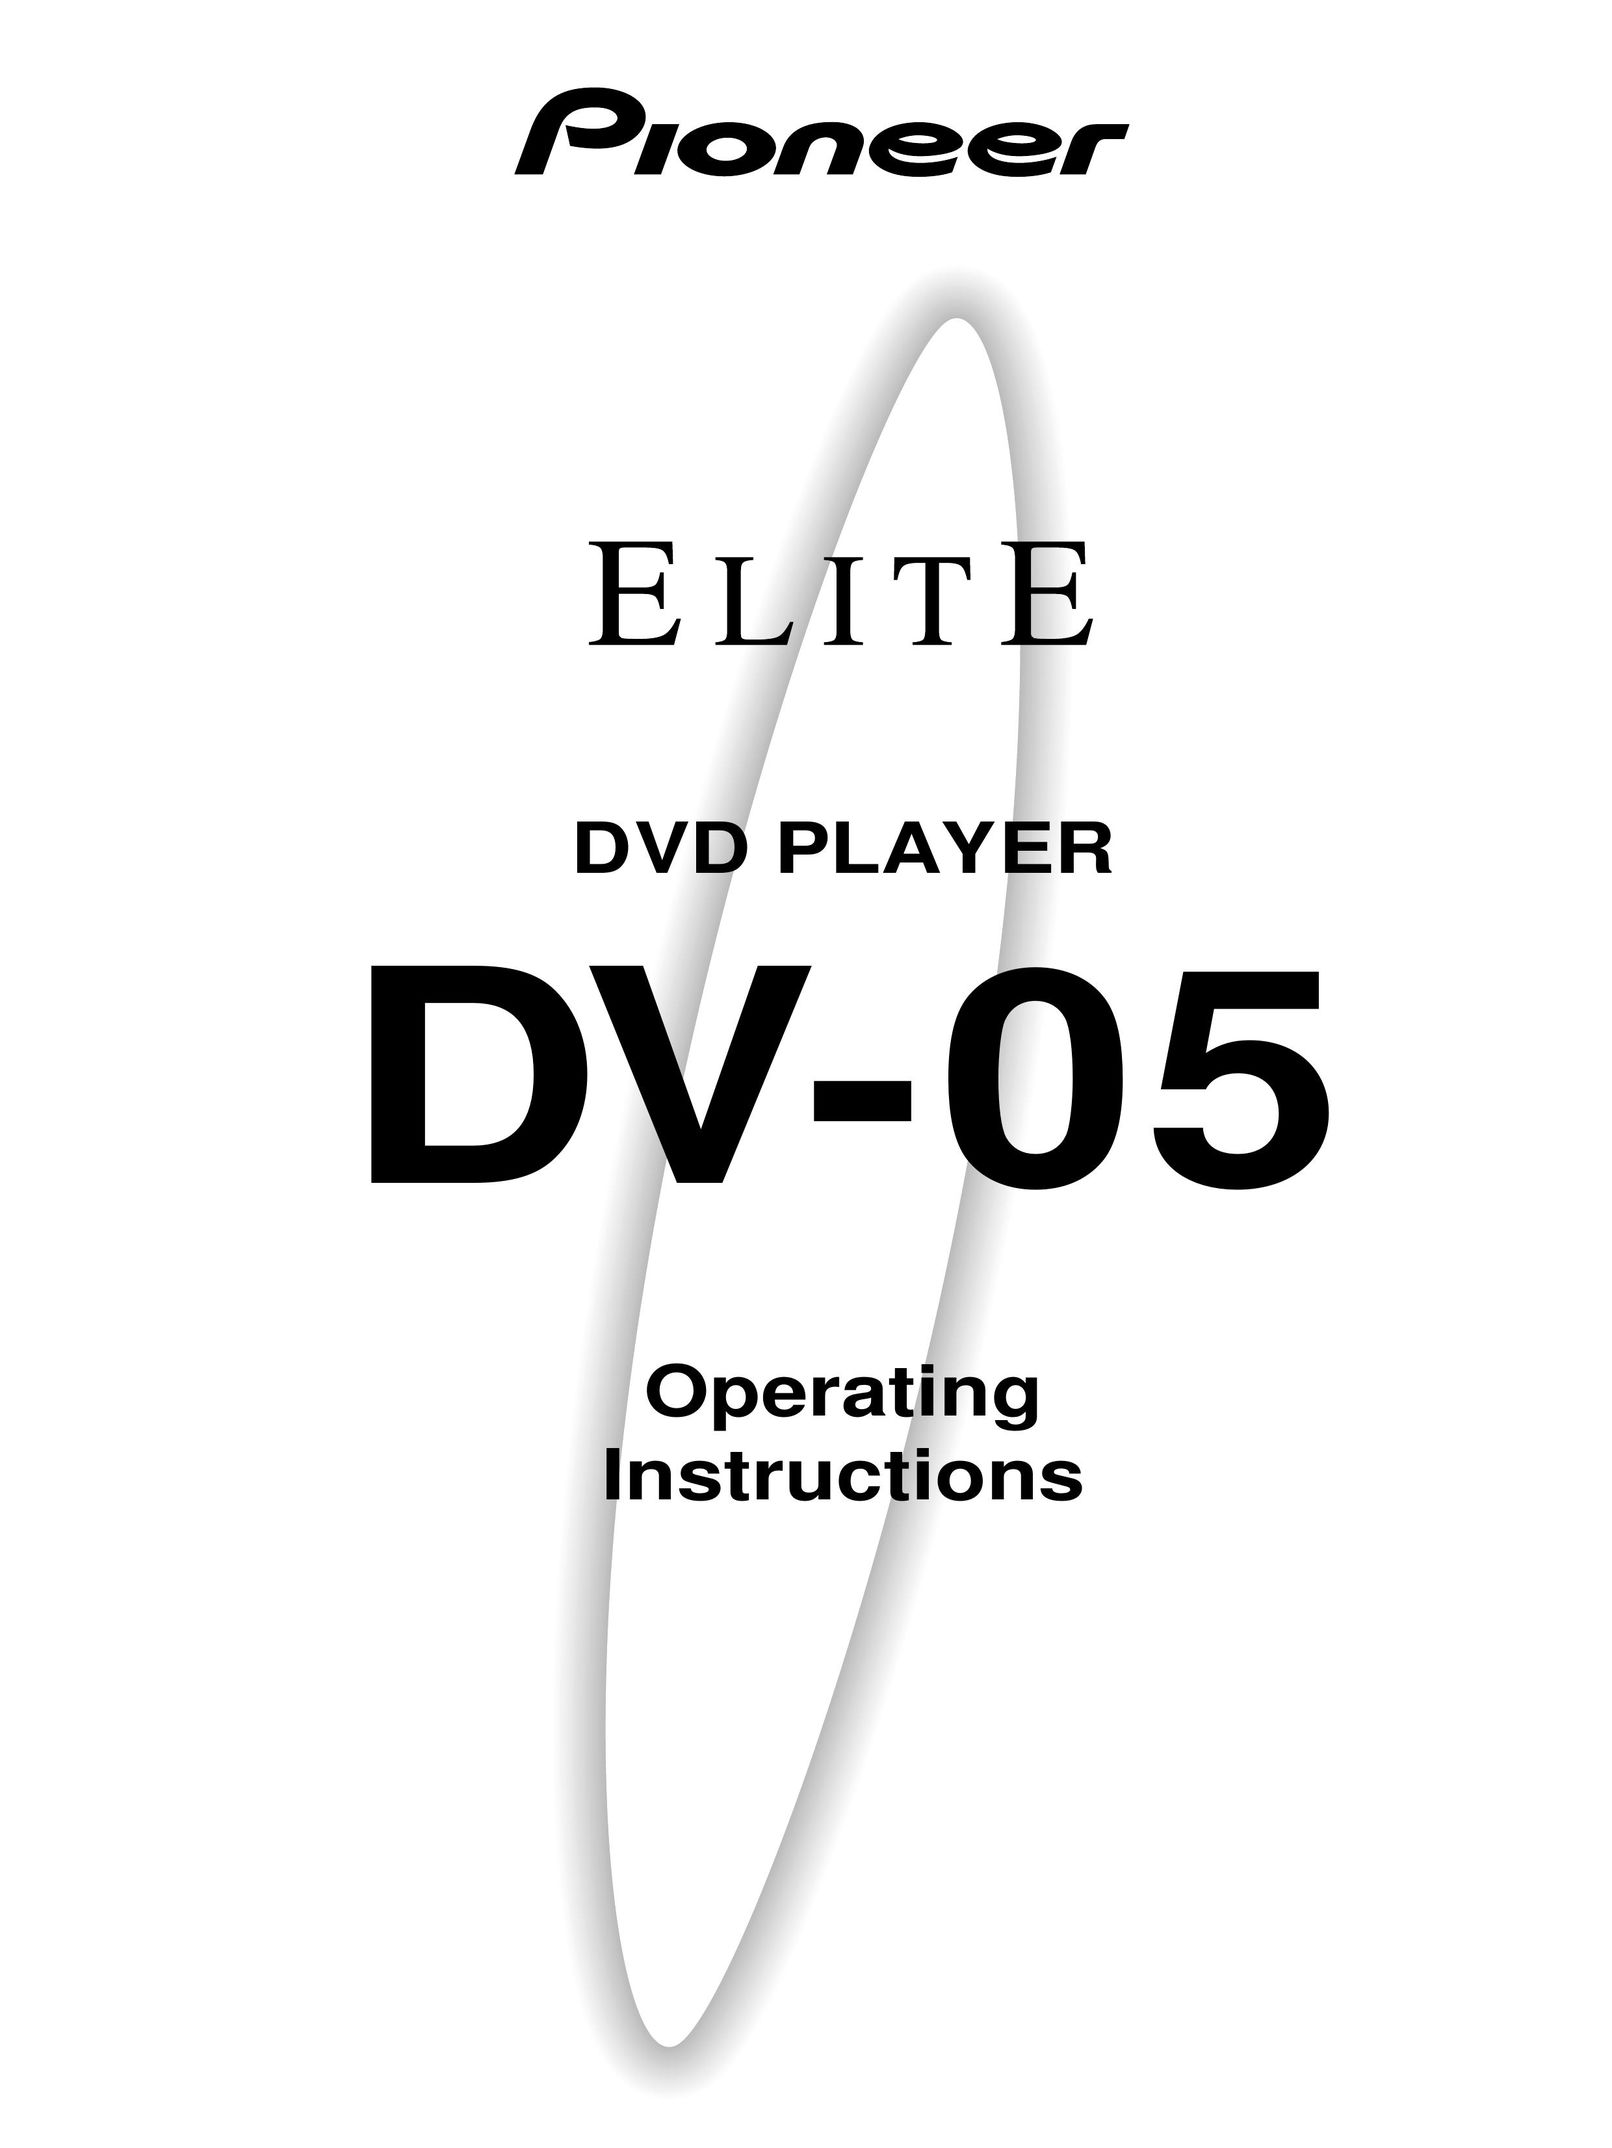 Pioneer DV-05 DVD Player User Manual